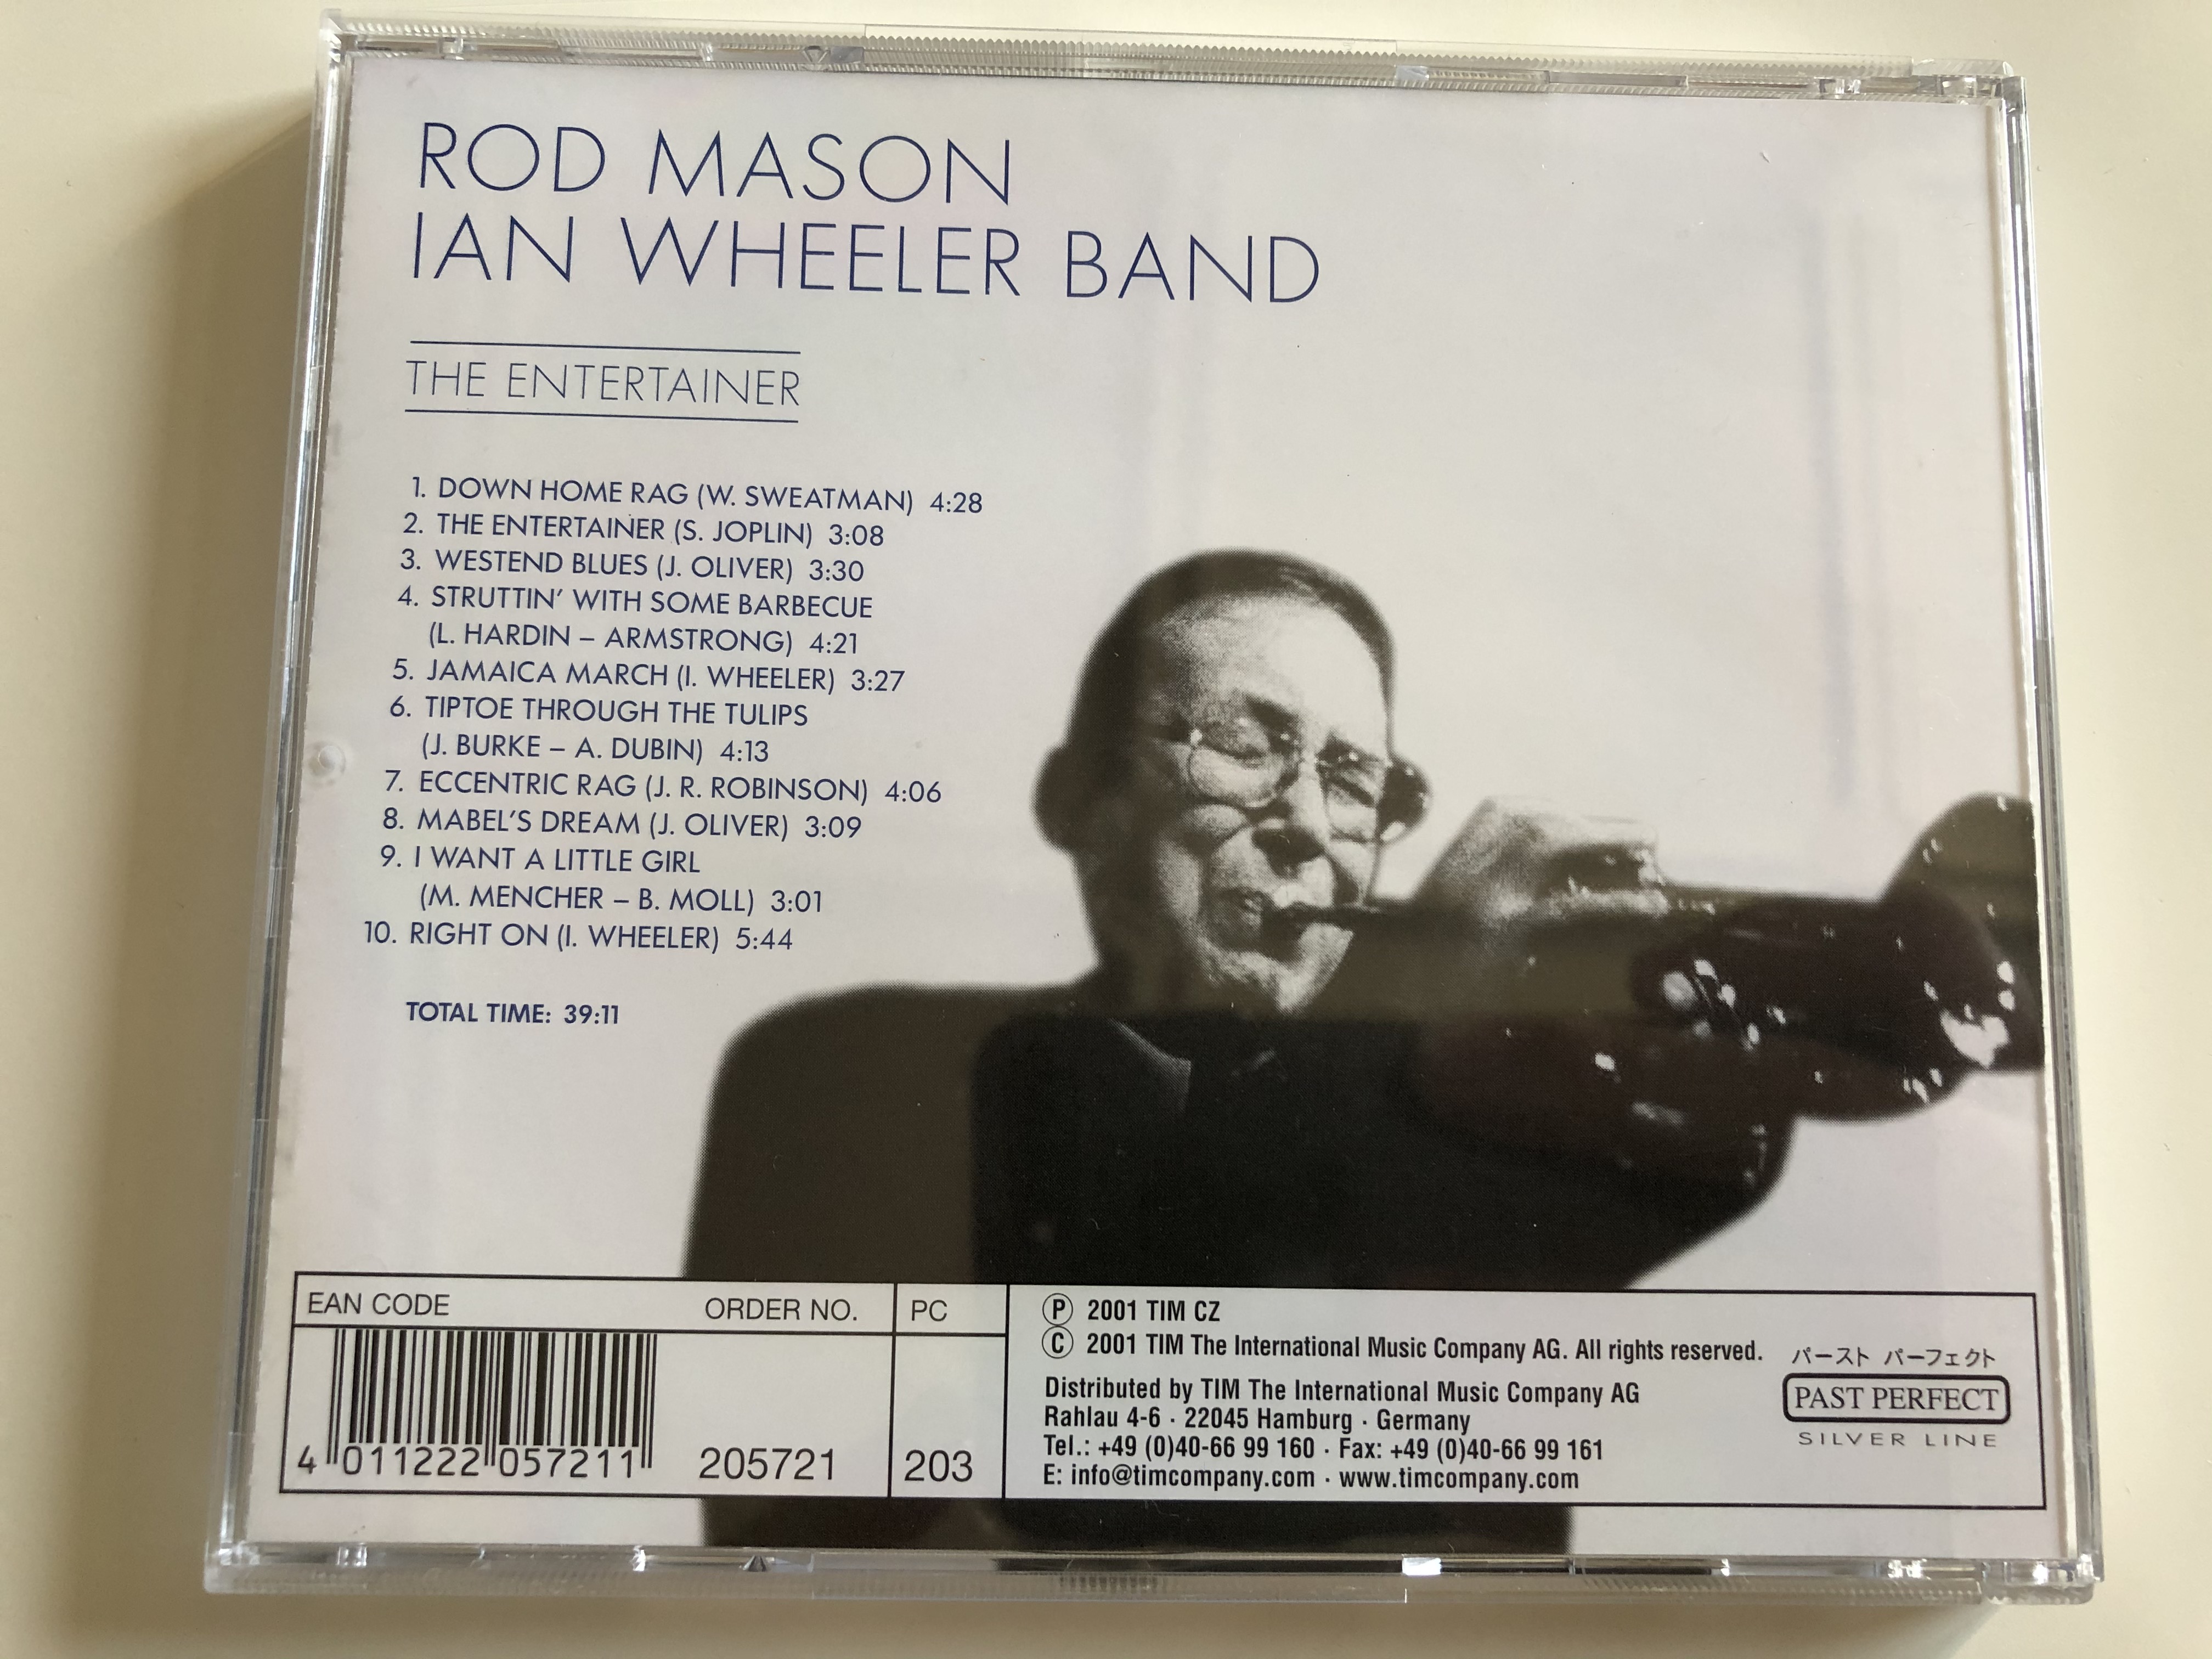 rod-mason-ian-wheeler-band-the-entertainer-past-perfect-silver-line-audio-cd-2001-stereo-205721-203-5-.jpg